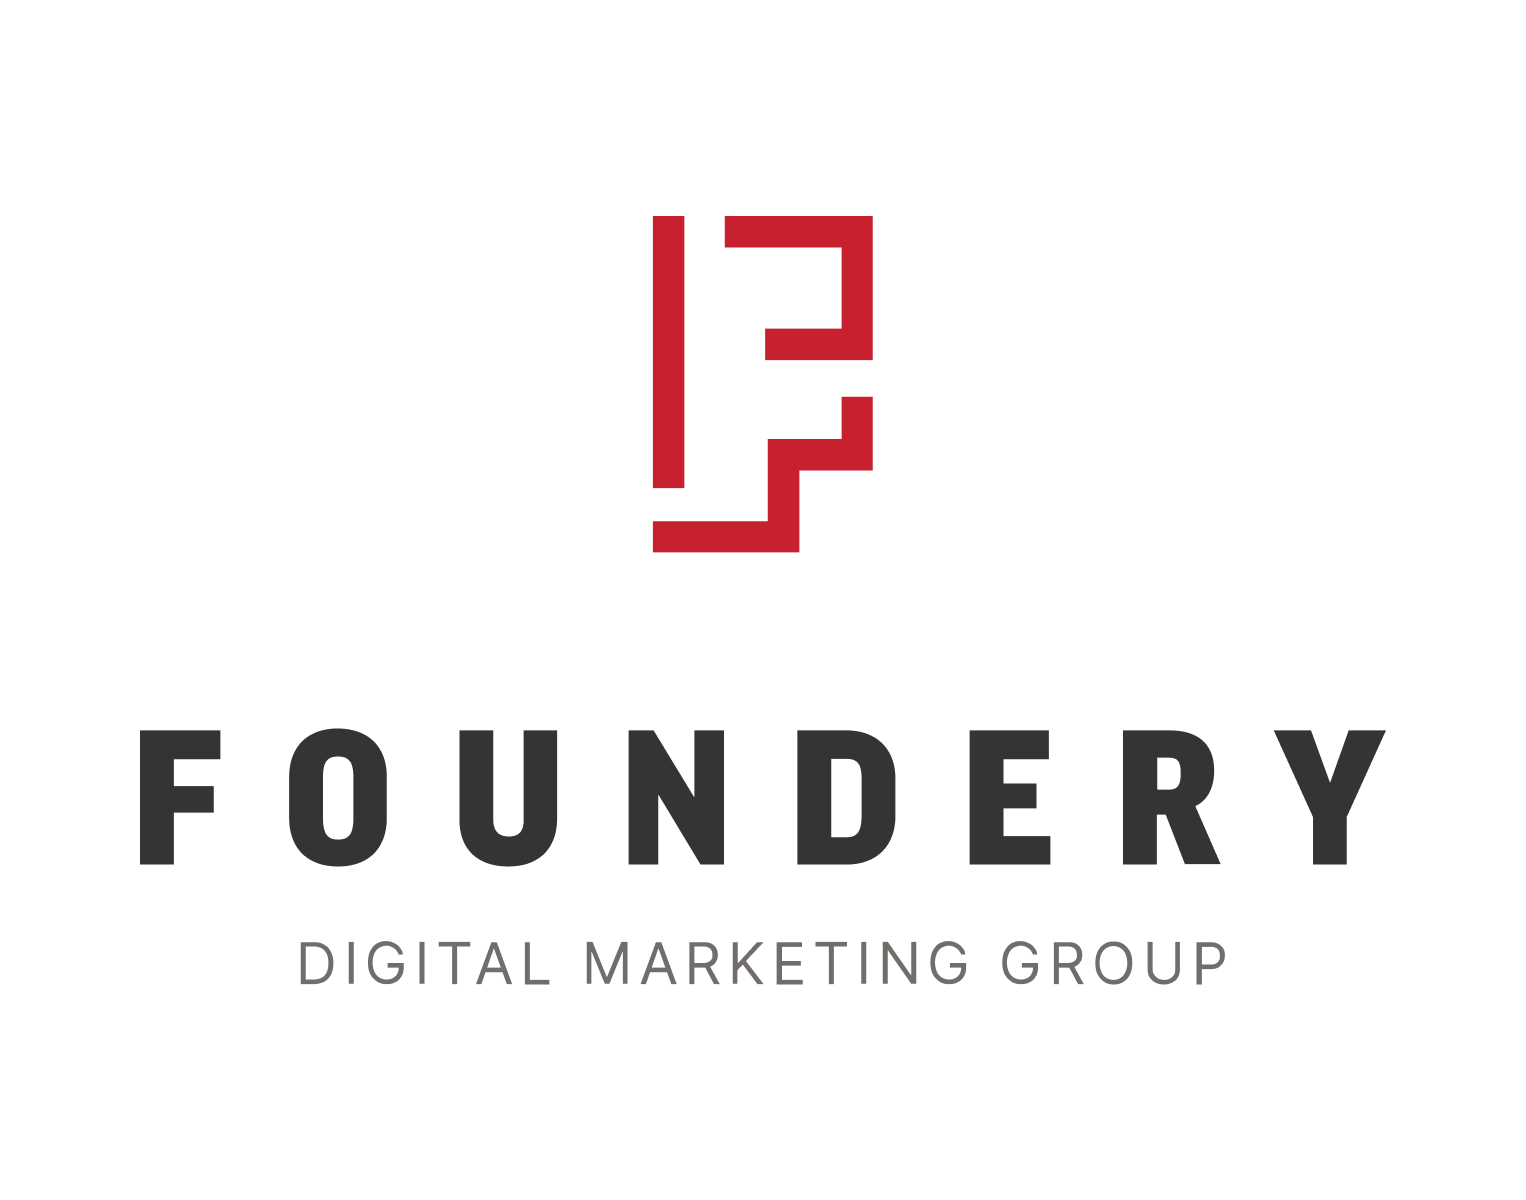 Foundery Digital Marketing Group Logo